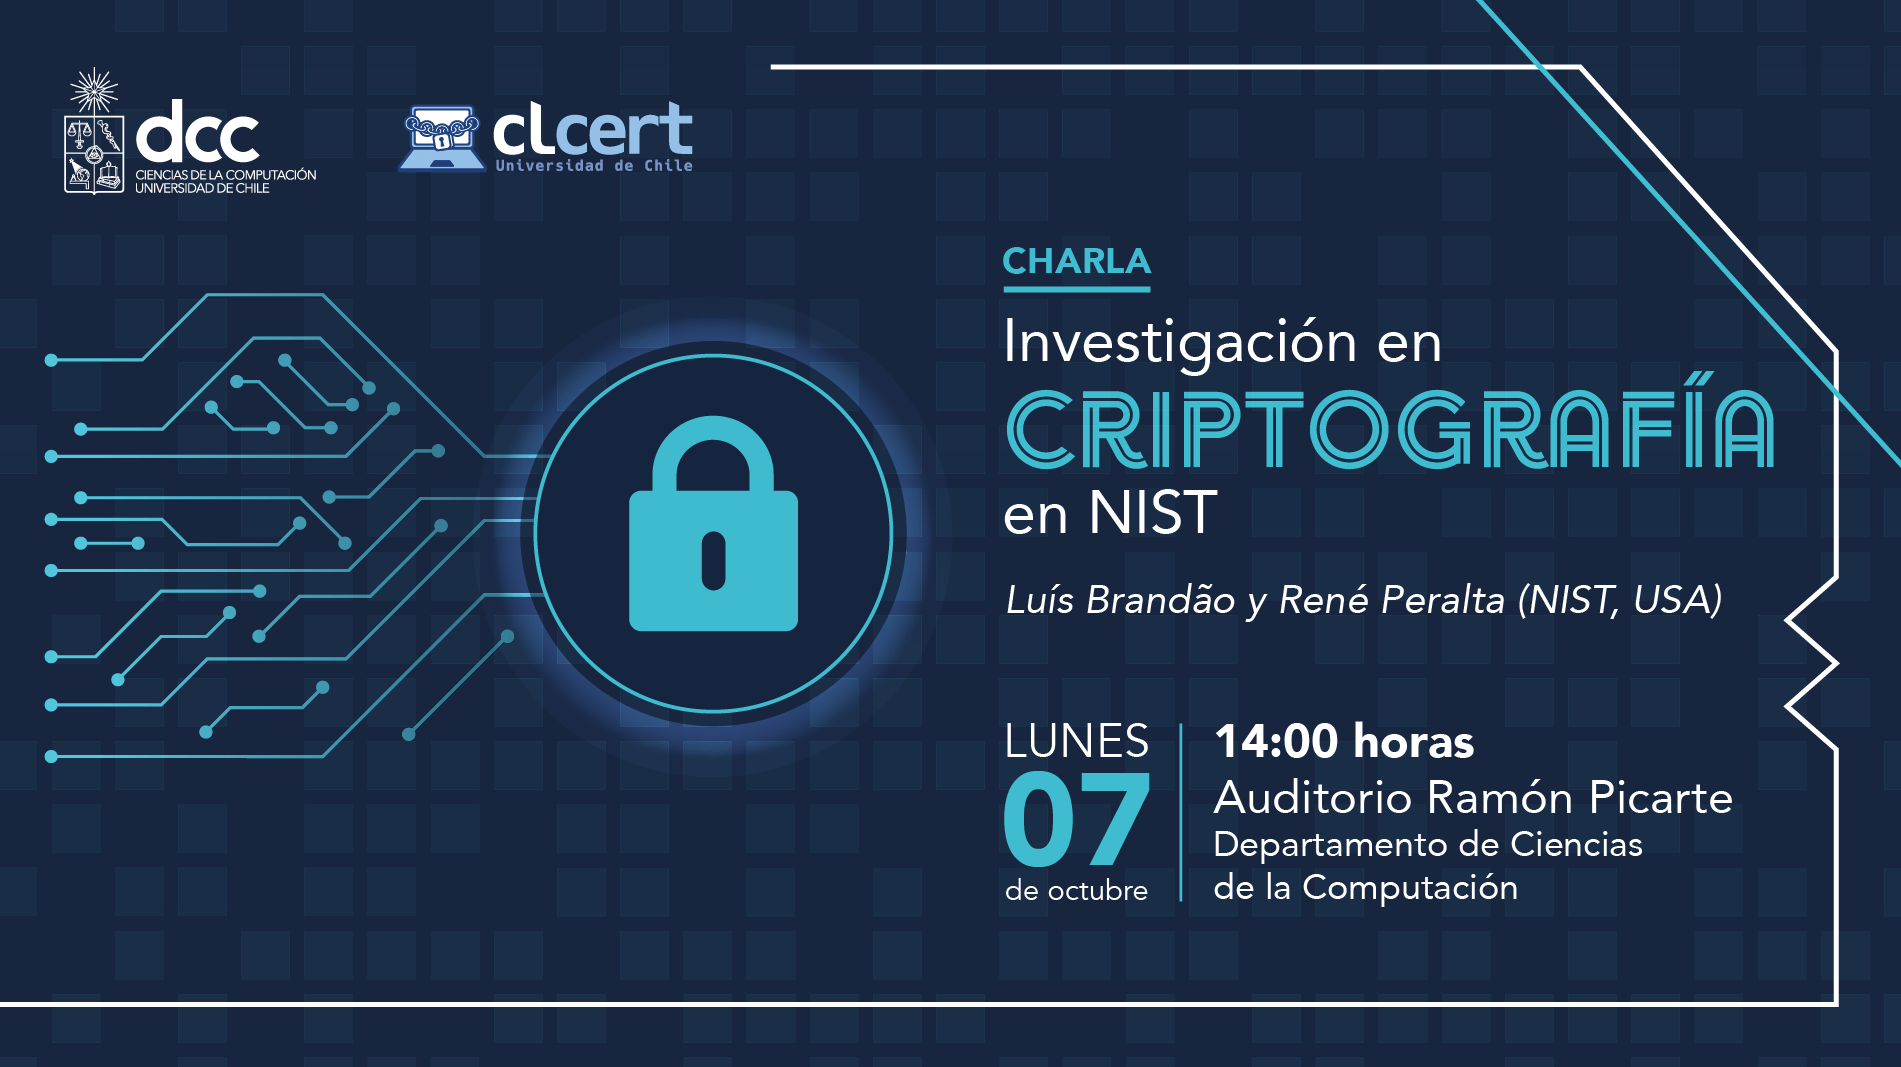 Charla: Investigación en Criptografía en NIST / Lunes 07 de octubre - 14:00 hrs. - Auditorio Ramón Picarte